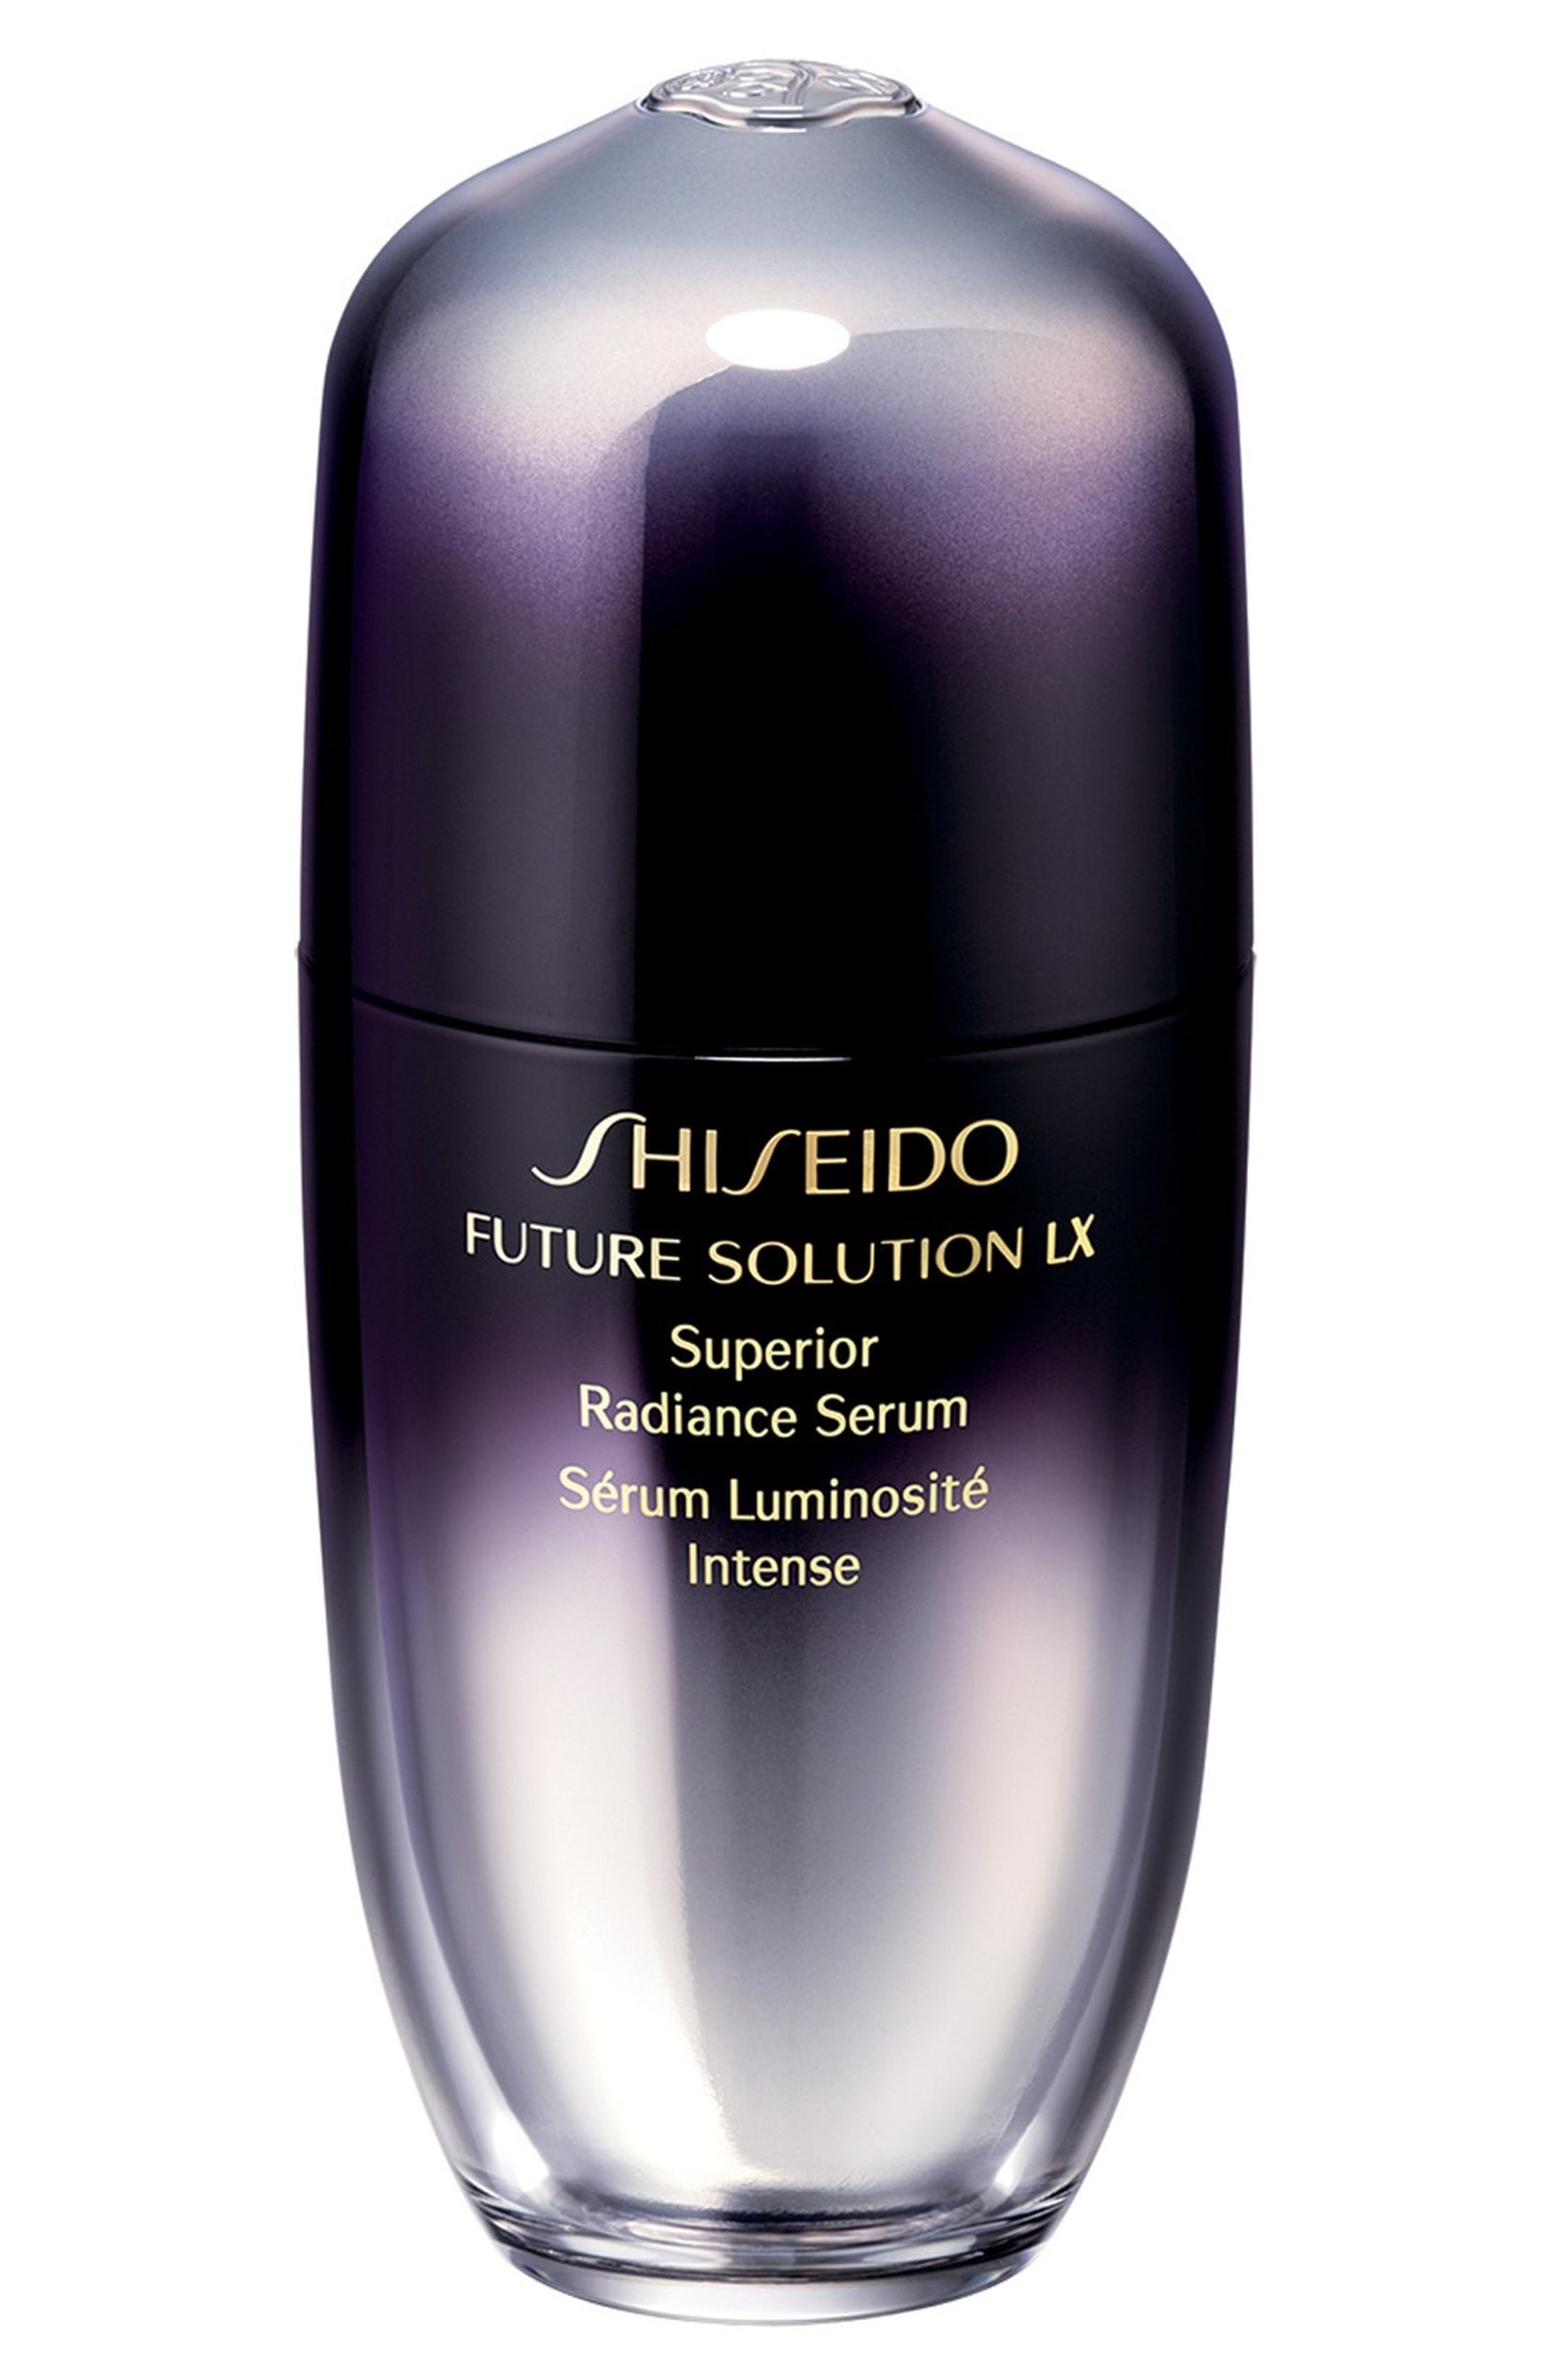 Shiseido solution lx